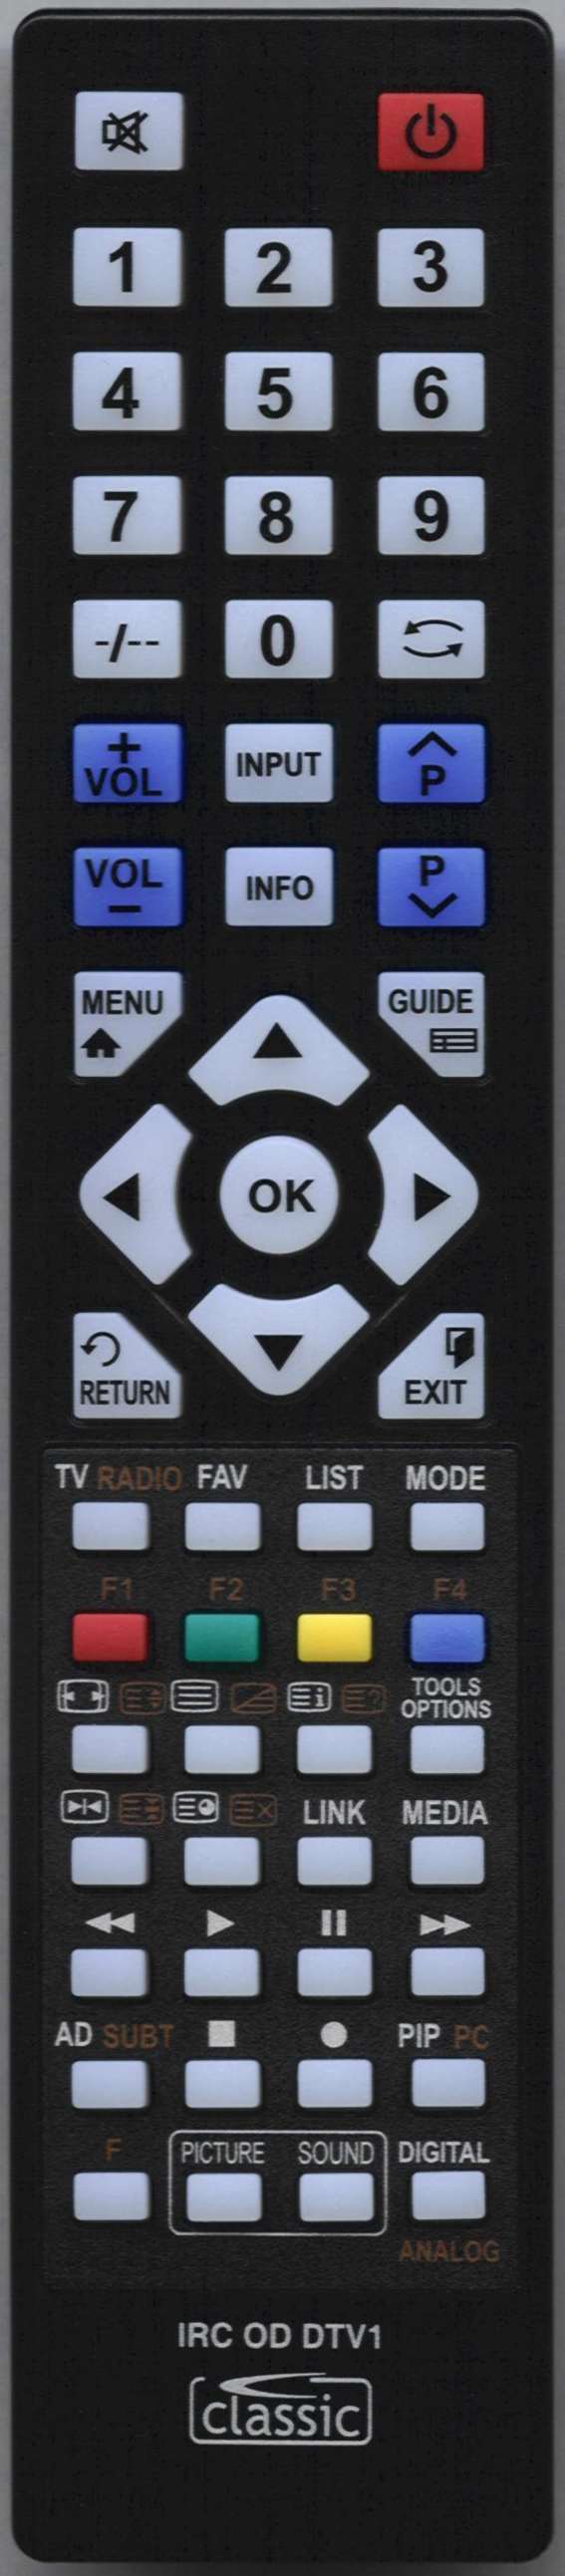 Samsung 00104K Remote Control Alternative